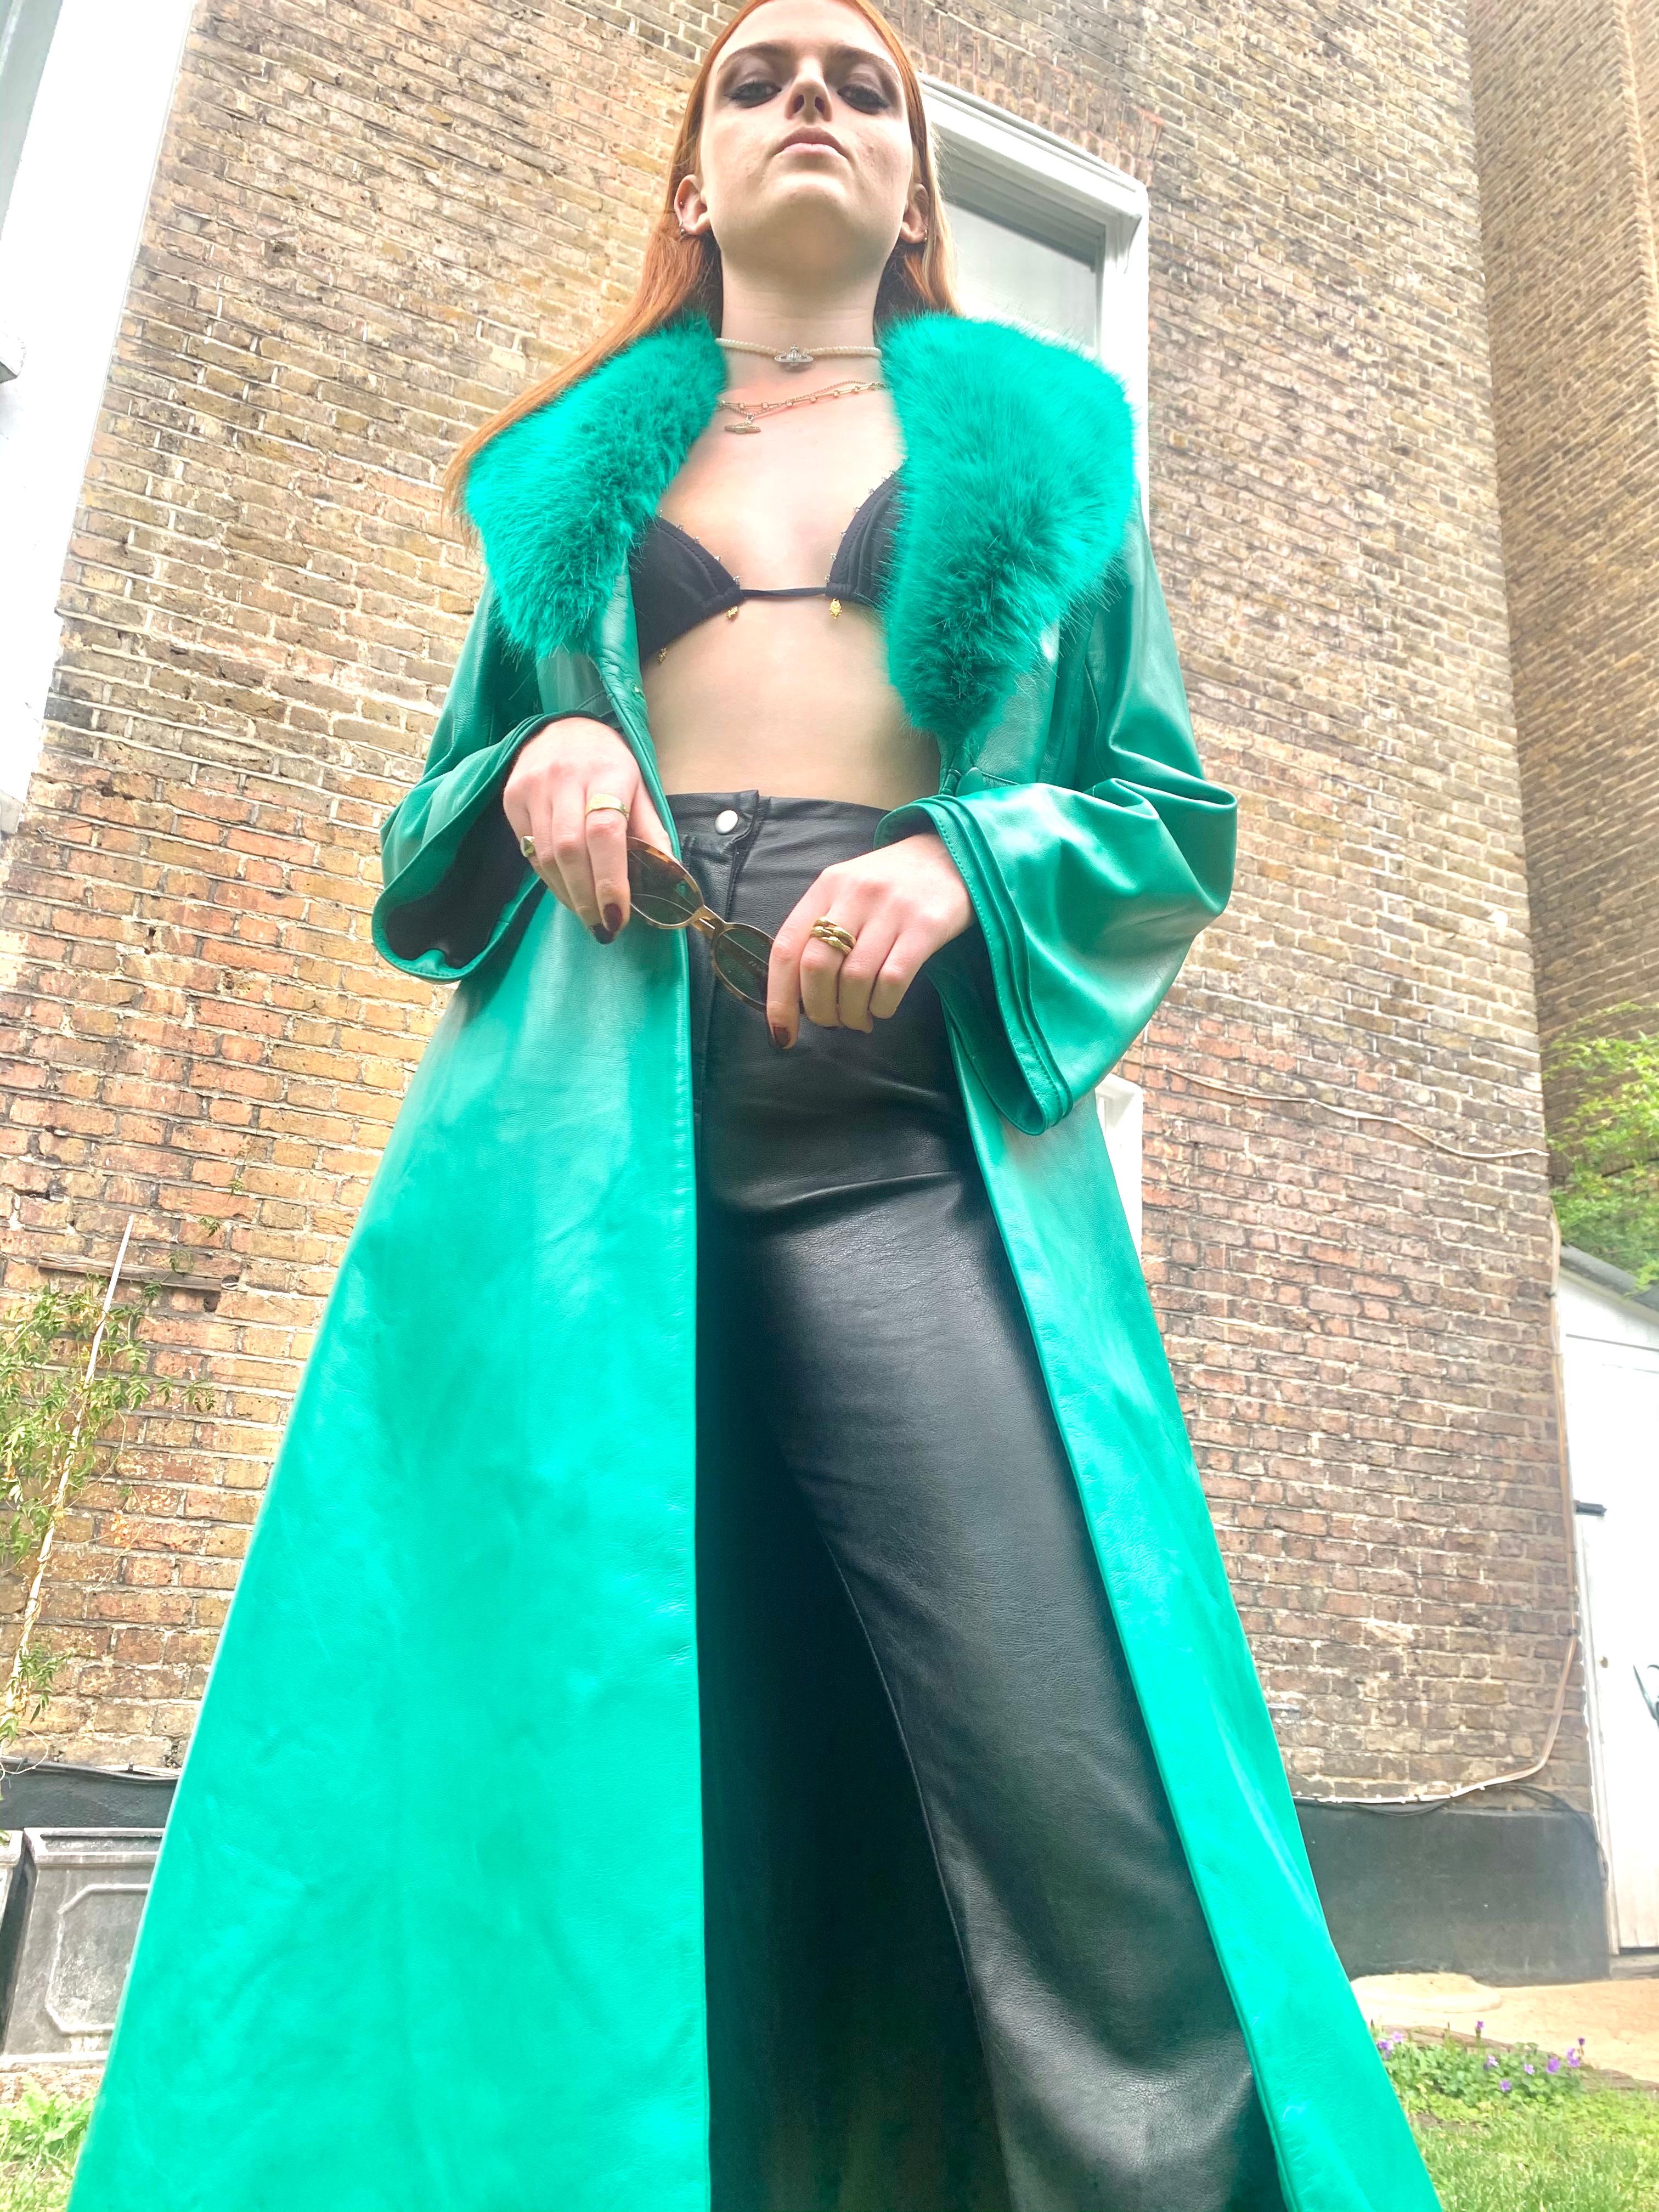 green leather fur coat